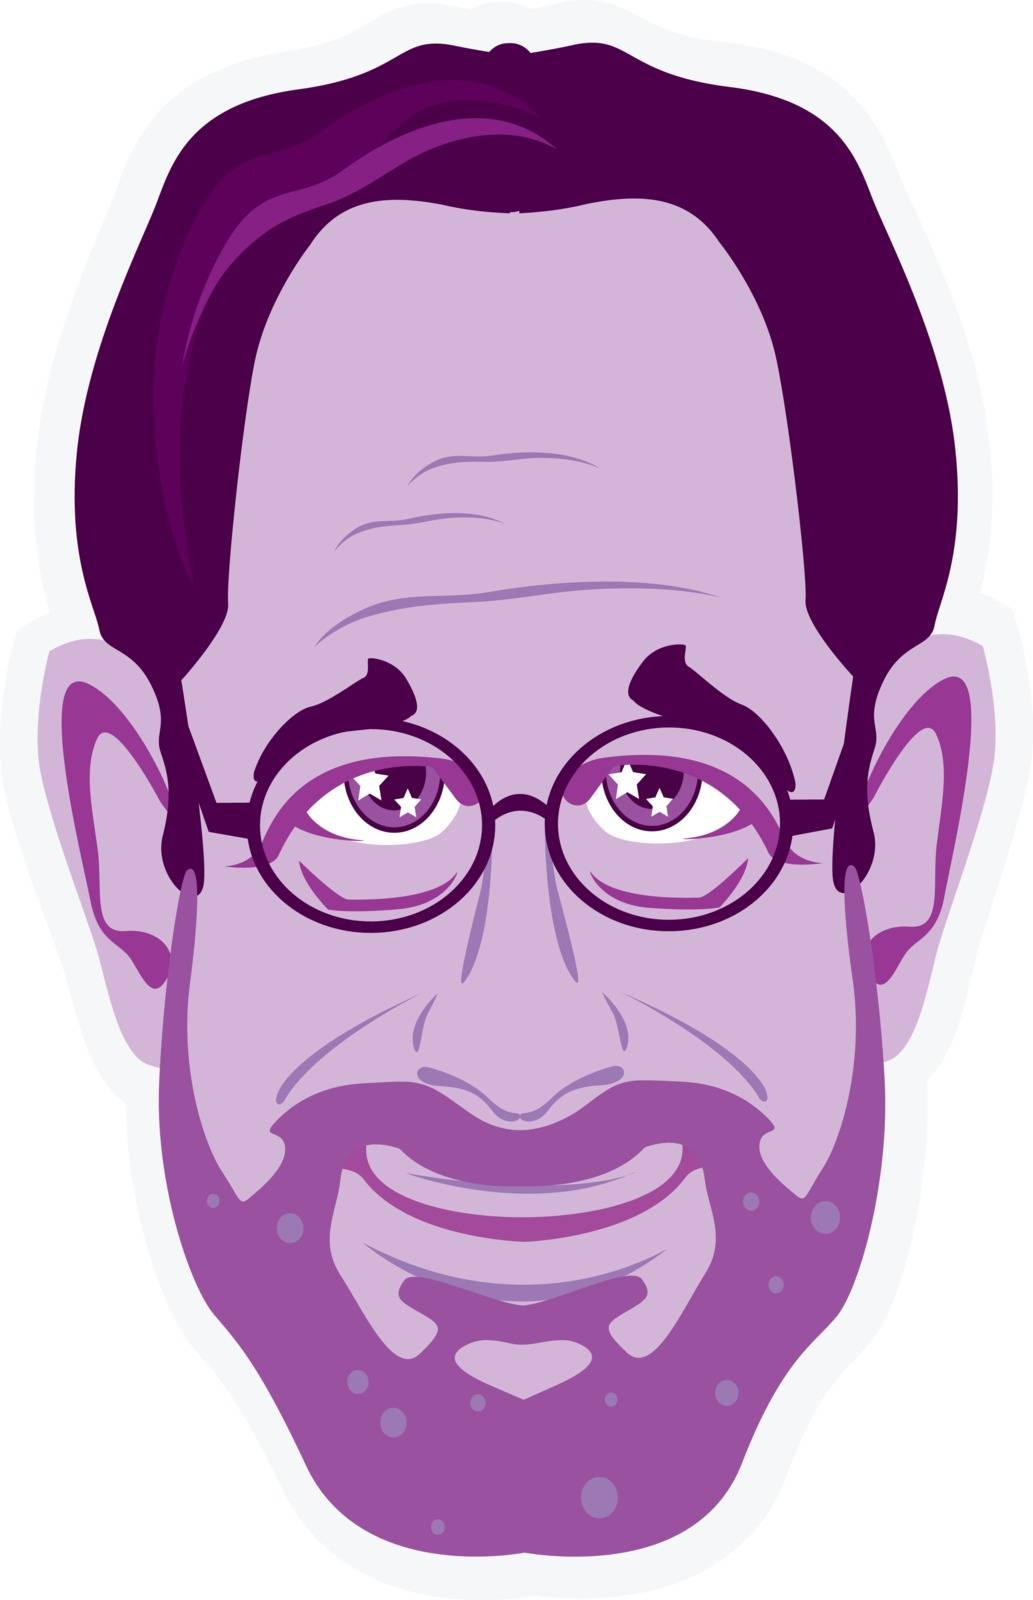 Professor bearded face vector illustration clip-art image by anton_novik